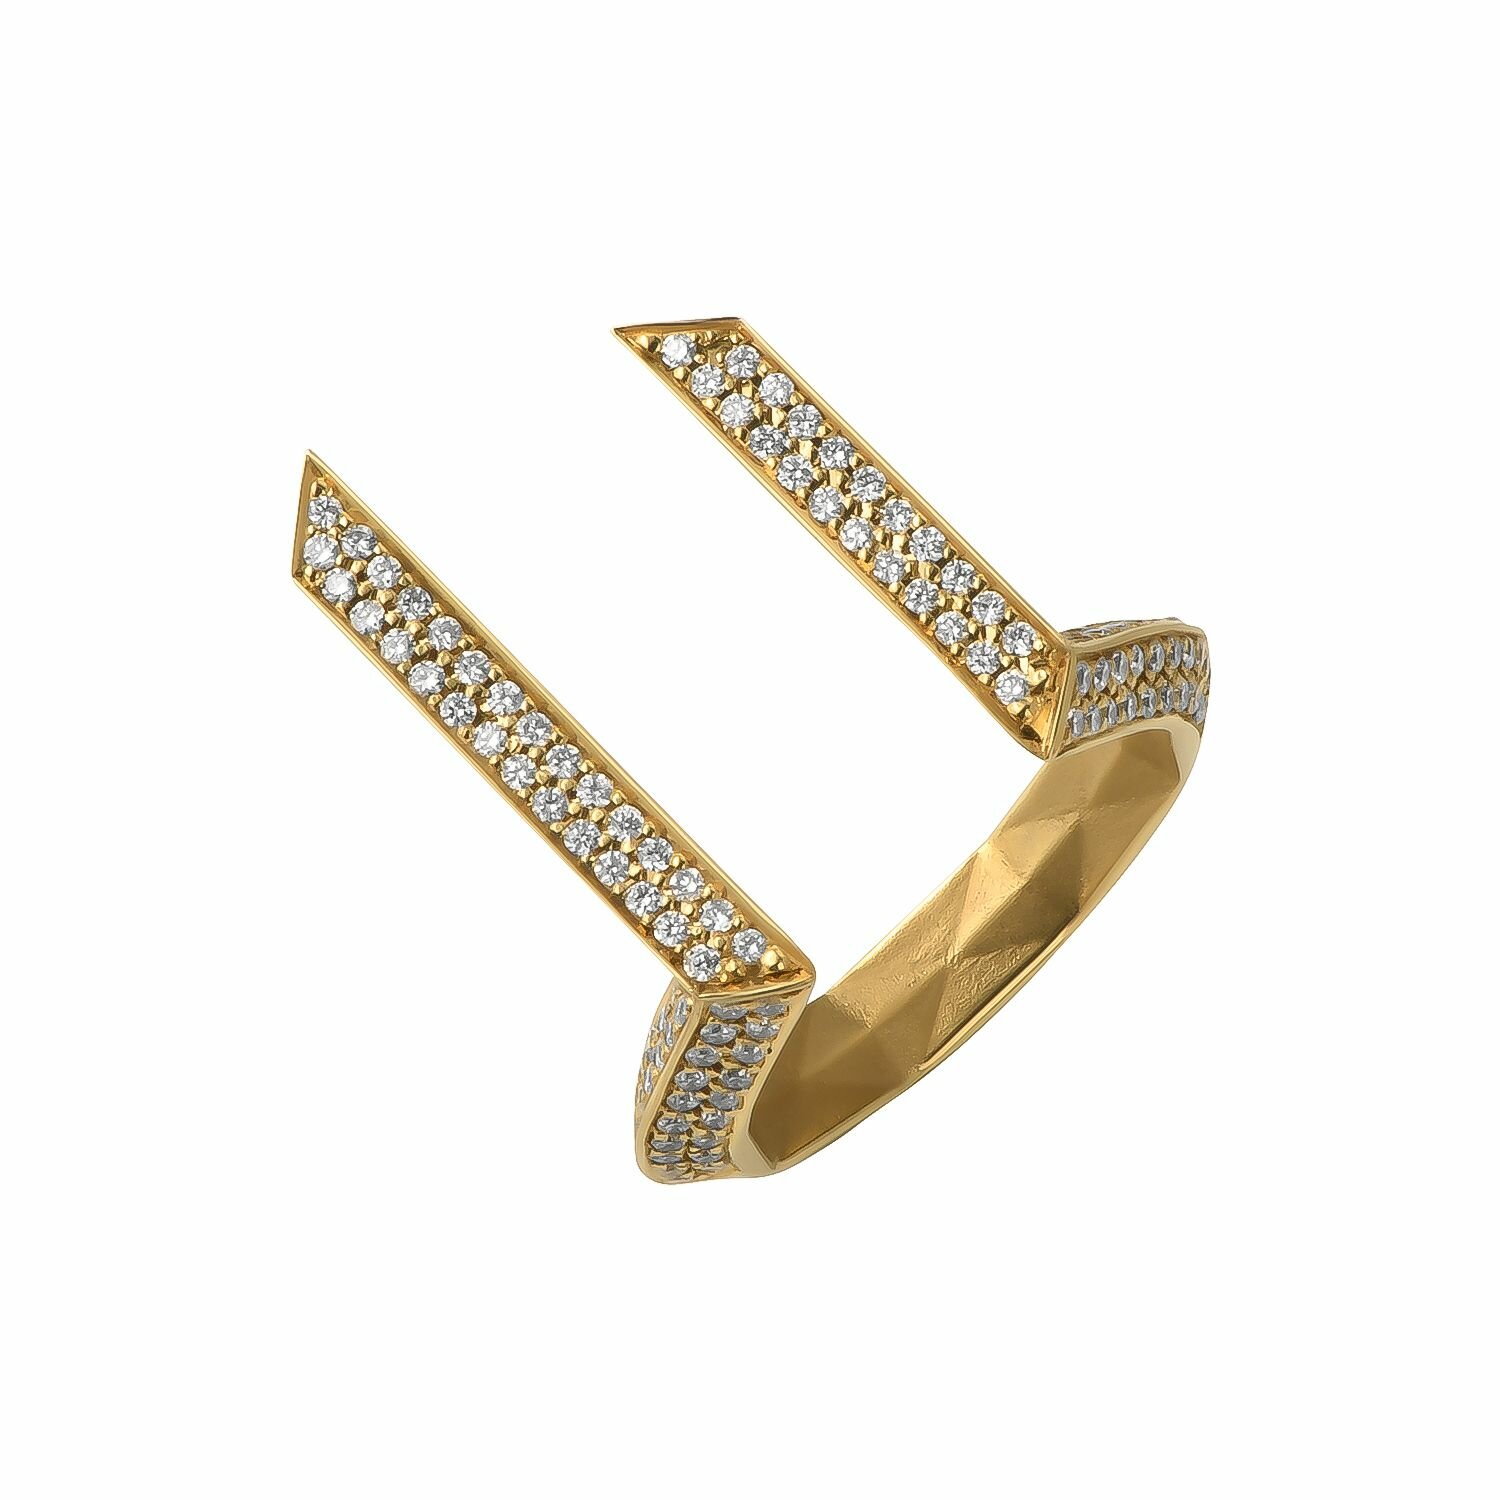 Кольцо Constantine Filatov разомкнутое кольцо с бриллиантами, желтое золото, 585 проба, бриллиант, размер 15.5, желтый